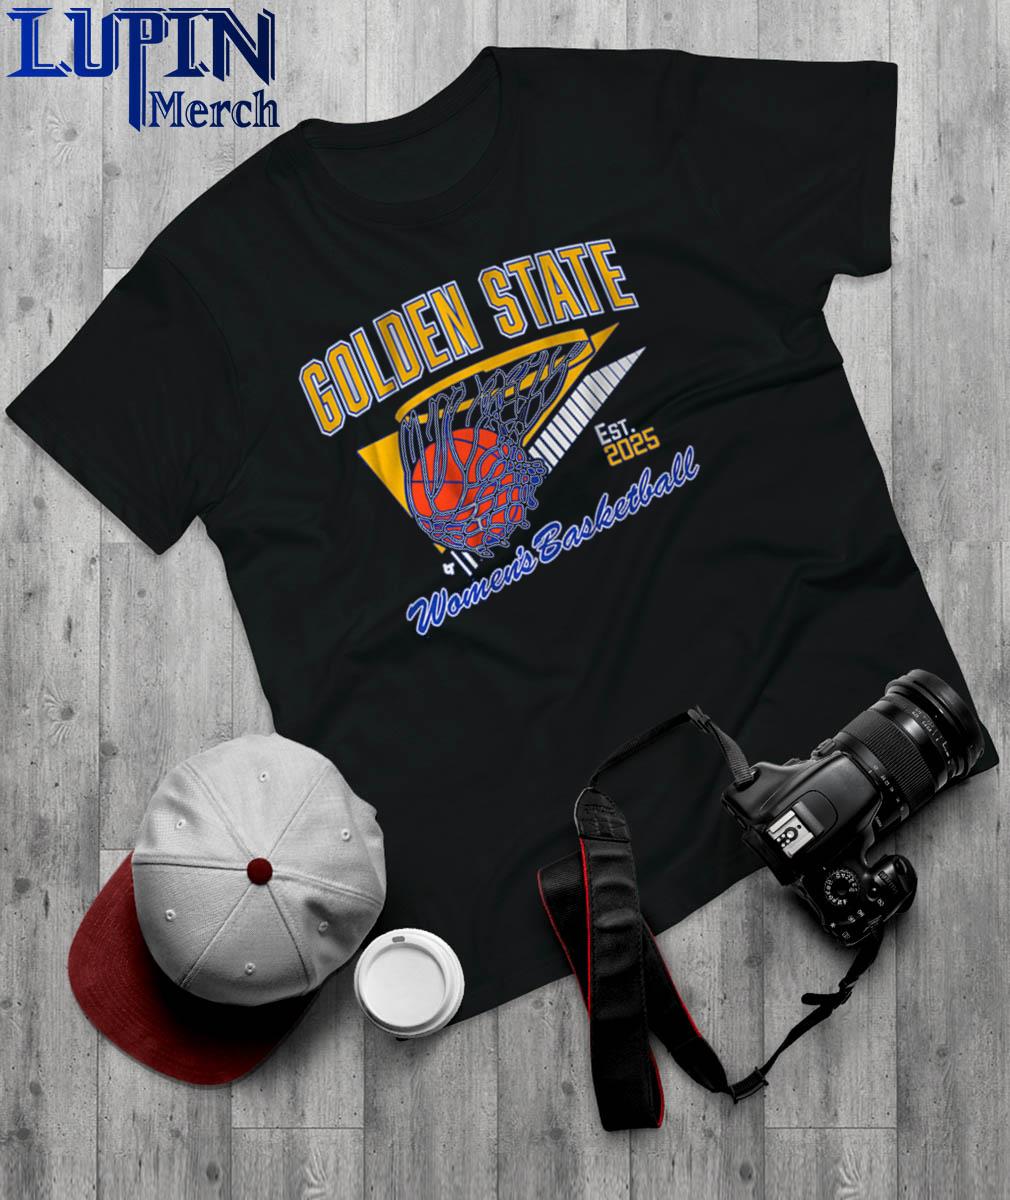 Stream Golden State Women's Basketball Est 2025 Sports Shirt by